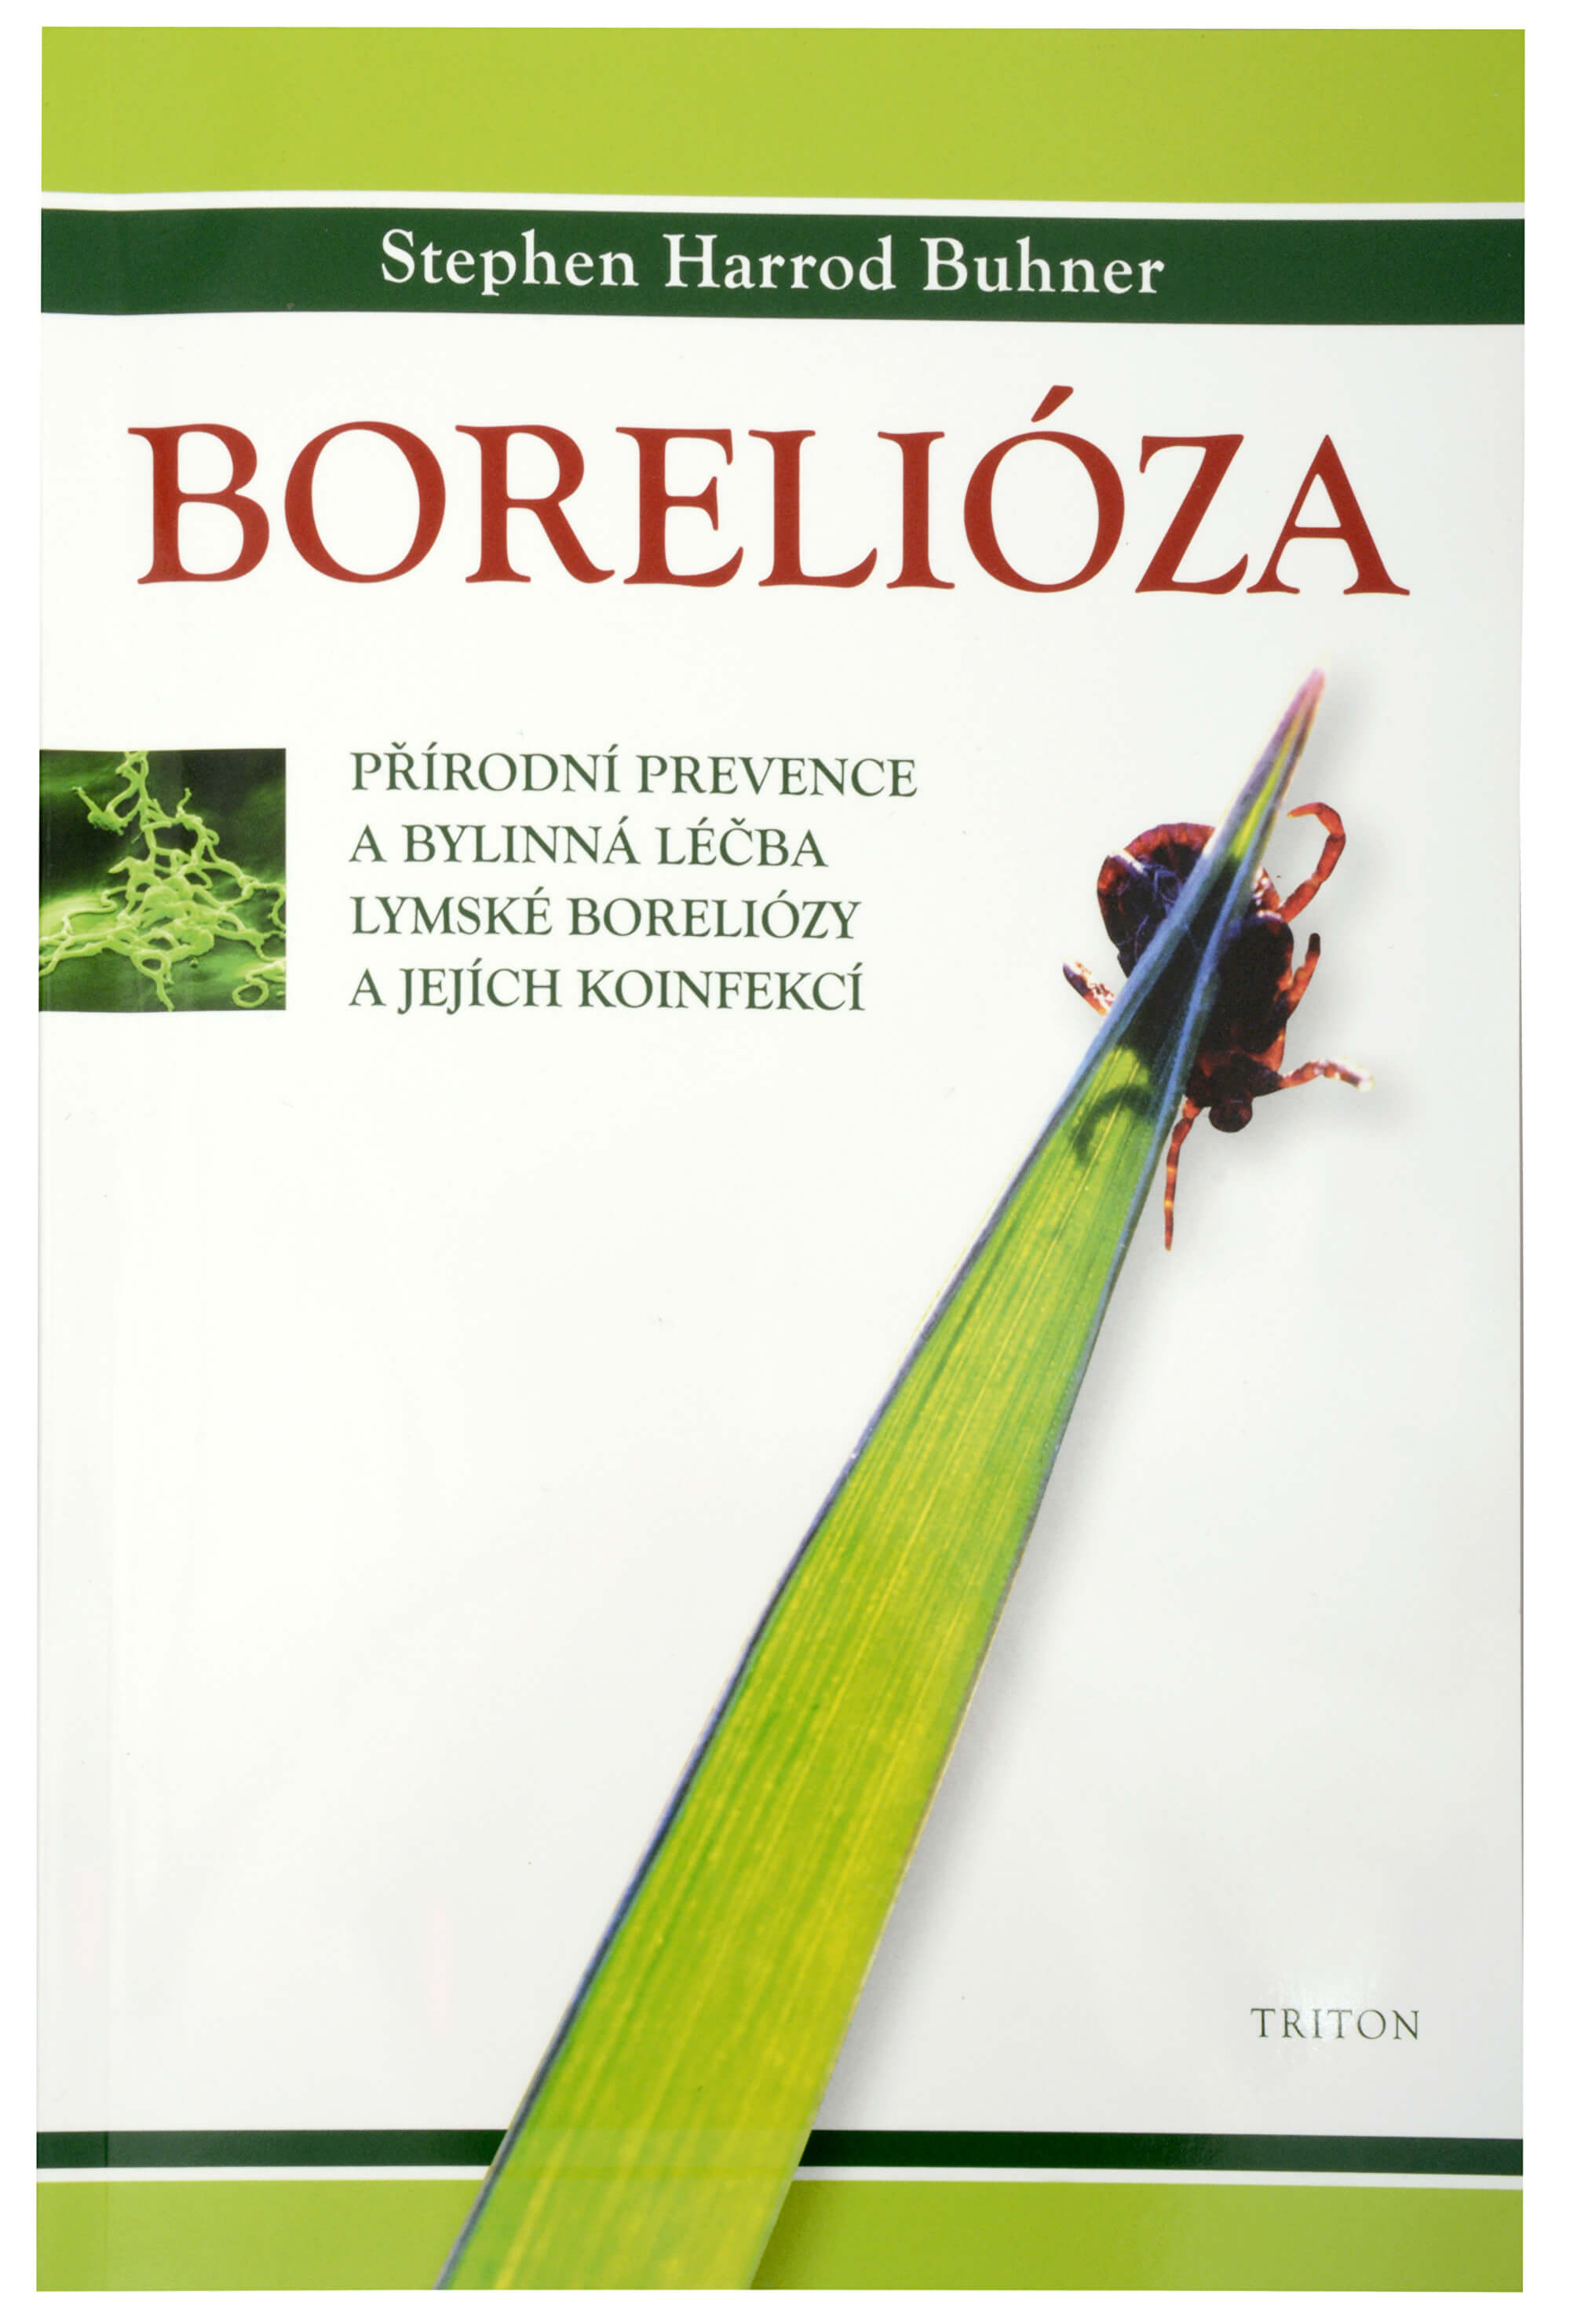 Zobrazit detail výrobku Knihy Borelióza (Stephen Harrod Buhner)